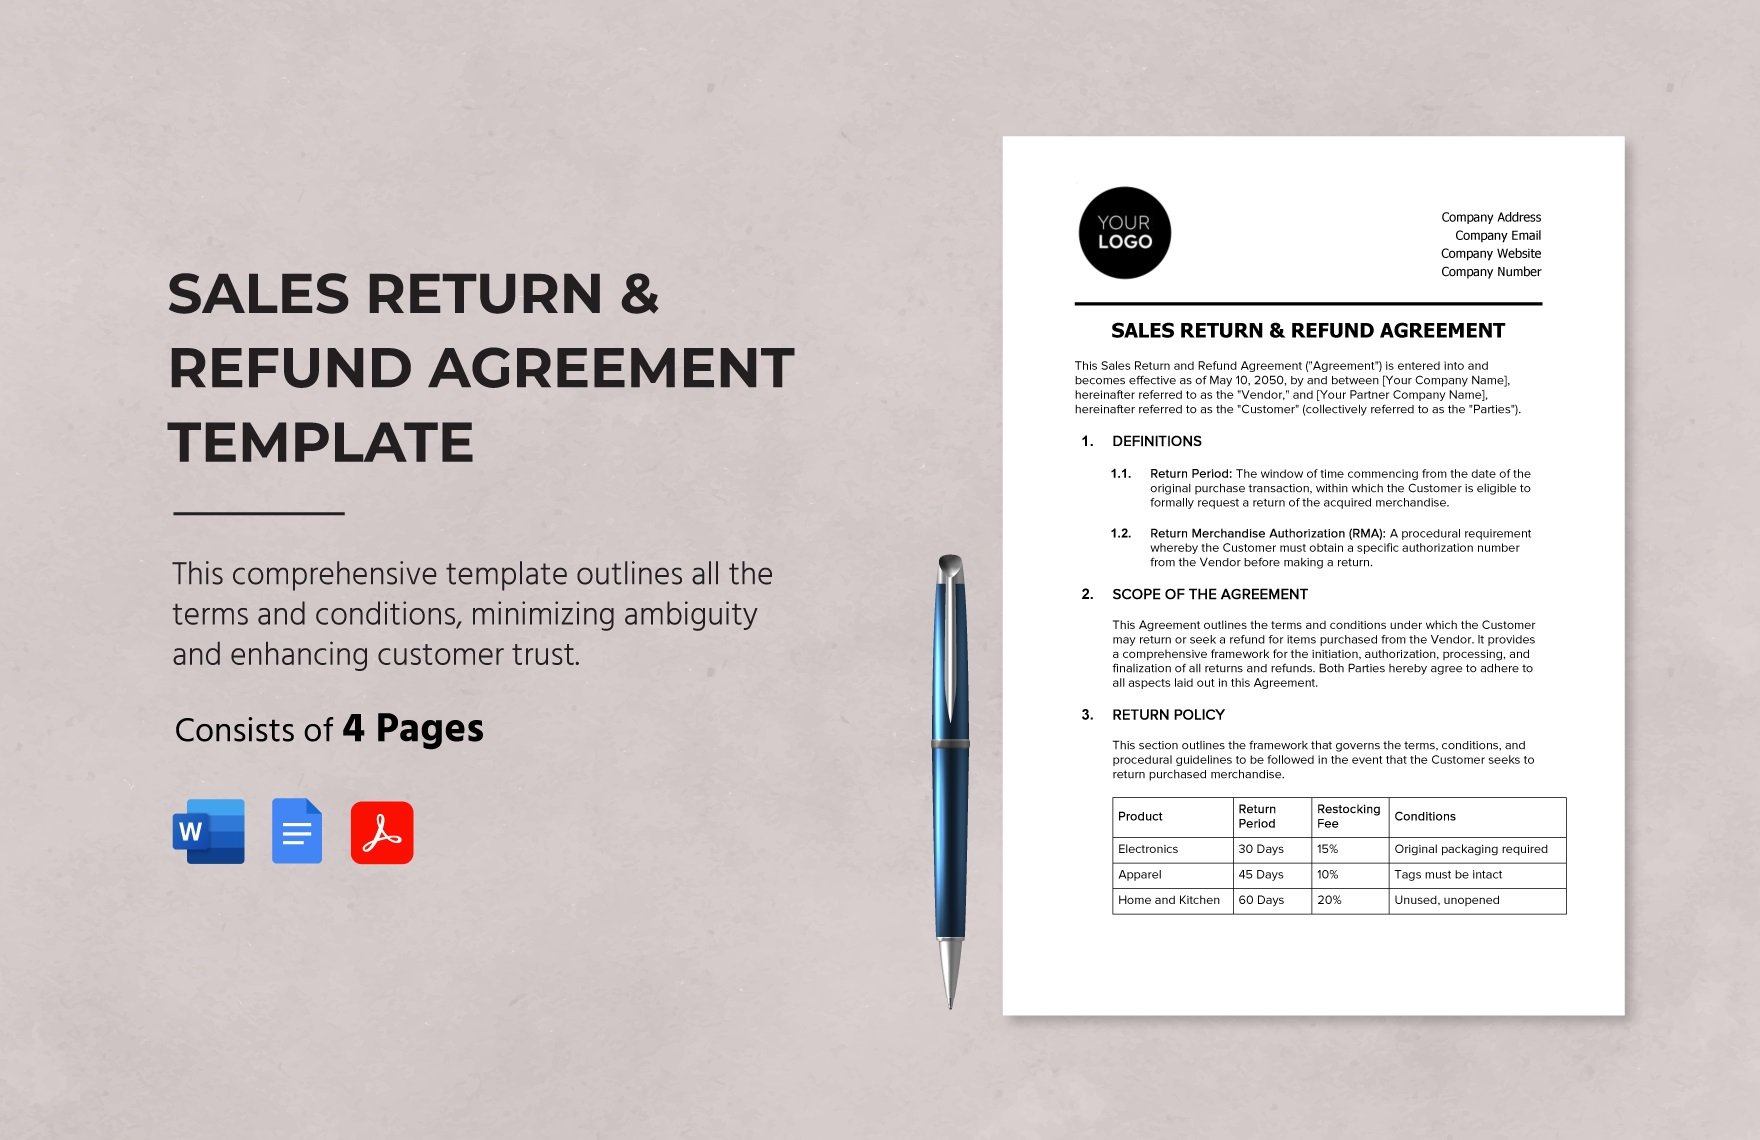 Sales Return & Refund Agreement Template in Word, Google Docs, PDF